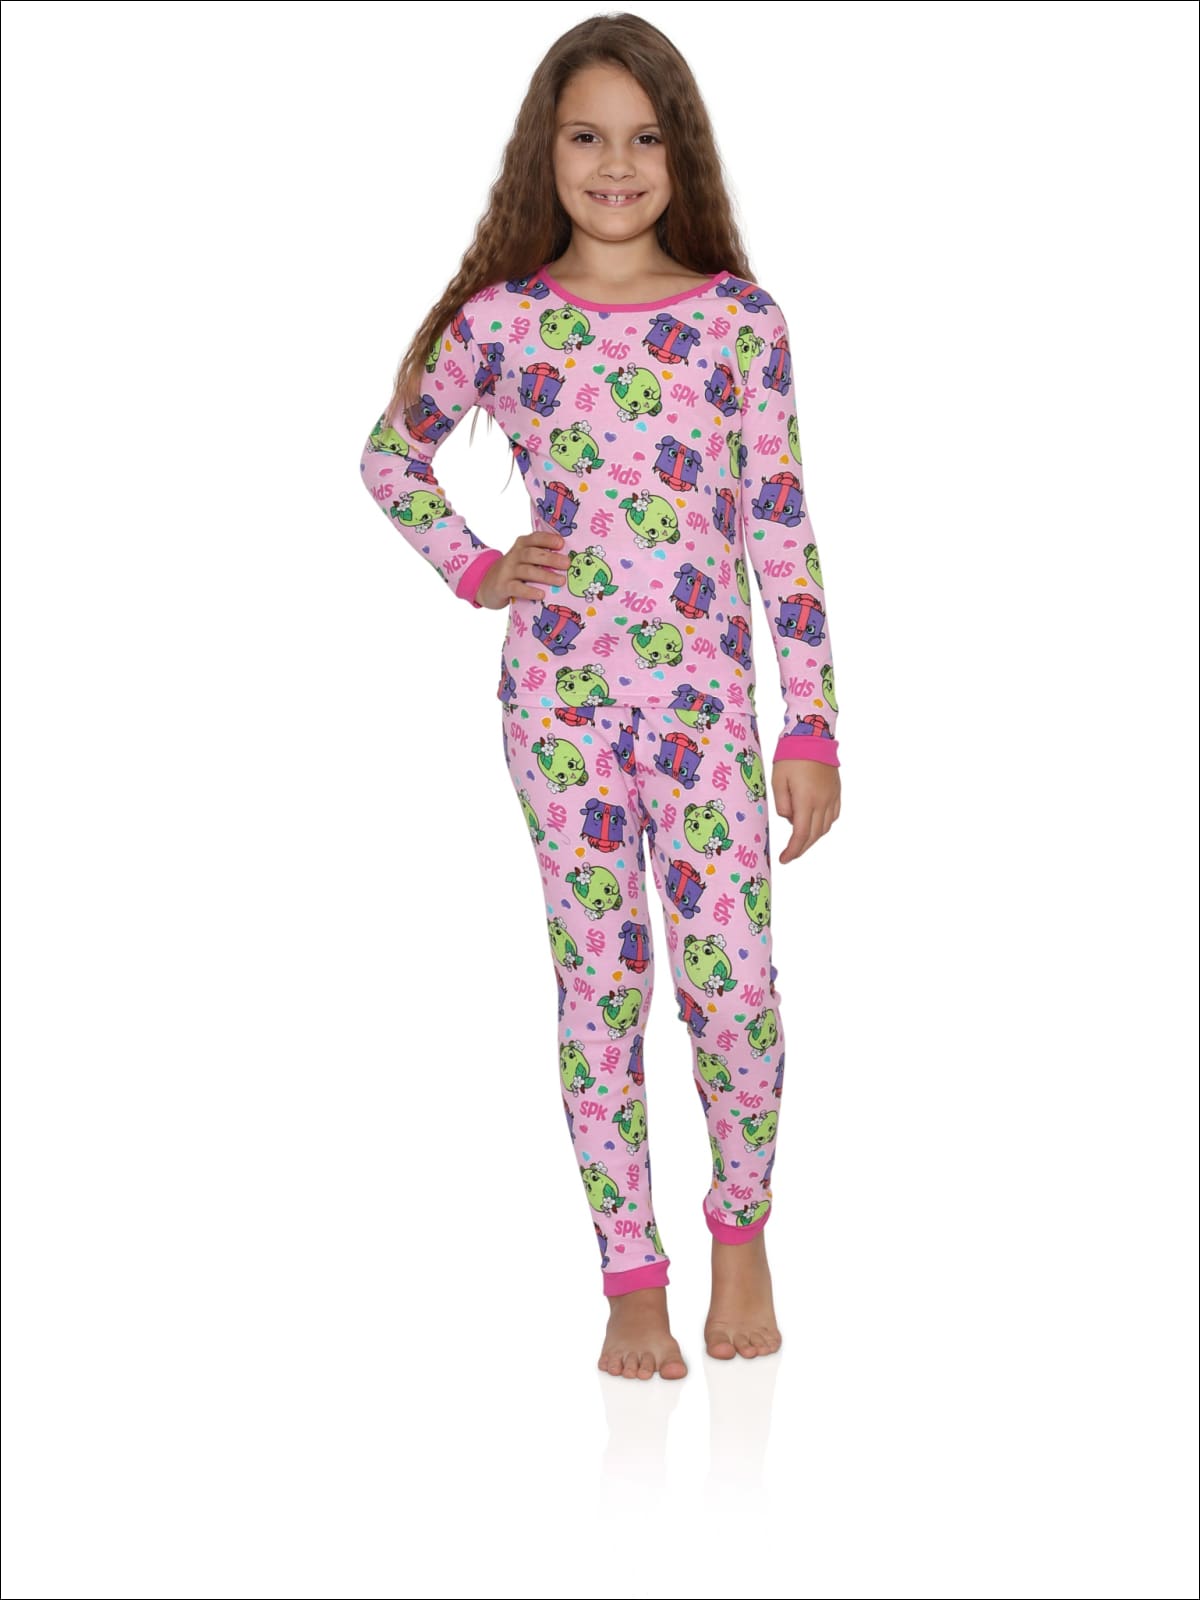 Shopkins Big Girls Cotton Pajama-4-Piece Set Pinkberry